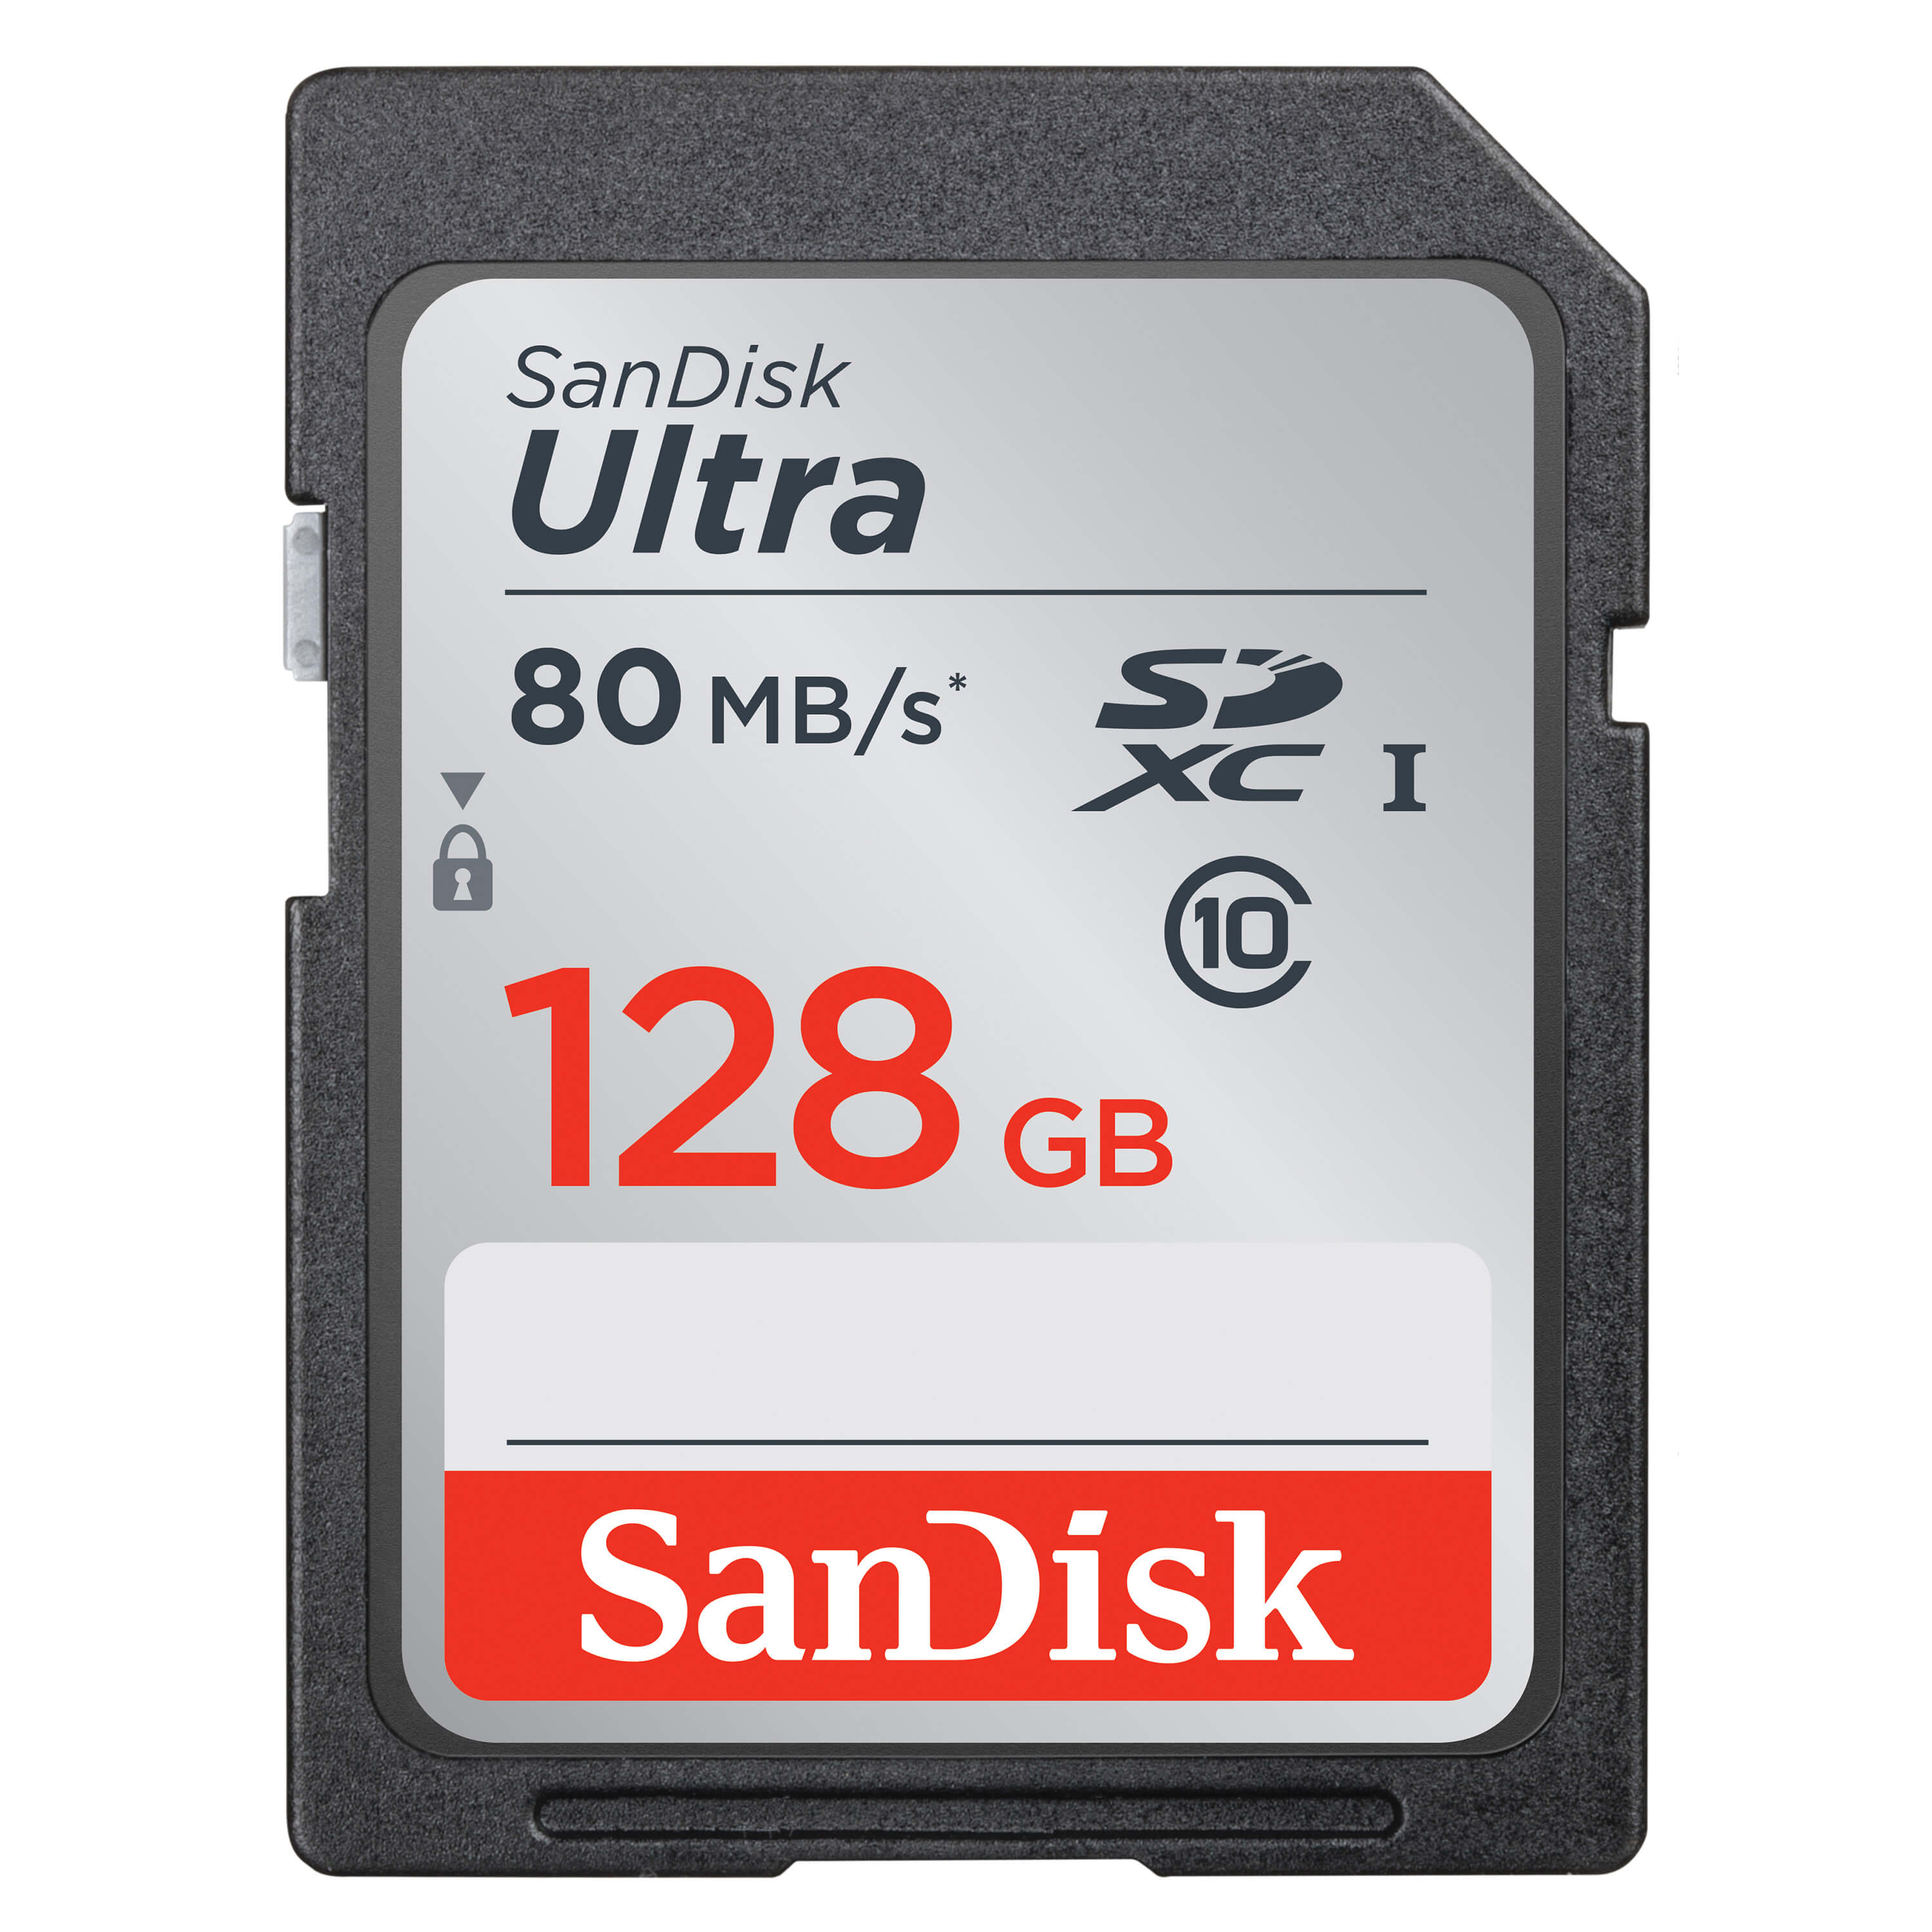 Sandisk SDXC Ultra 128GB 80MB/s UHS-I Class 10